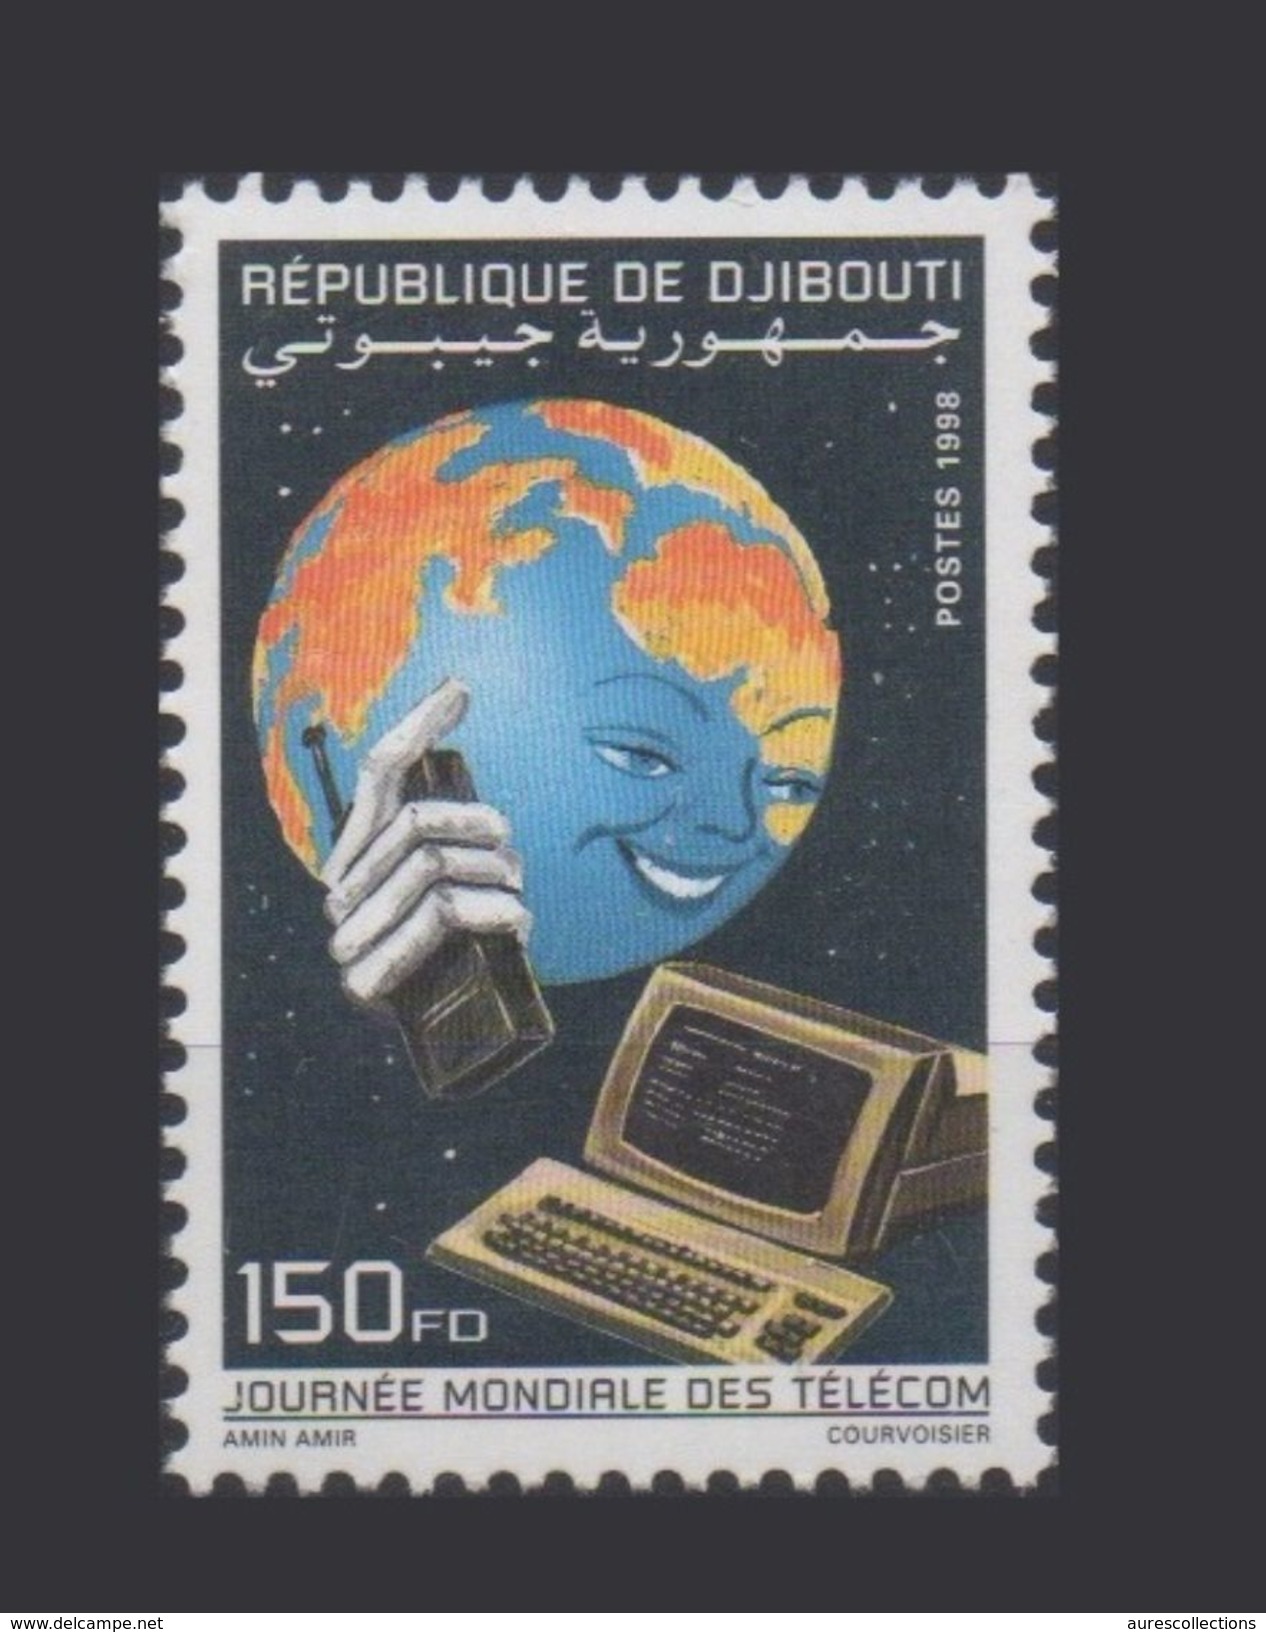 ¤NEW YEAR SALE¤ DJIBOUTI TELECOM JOURNEE MONDIALE TELECOMMUNICATIONS DAY Michel Mi 668 1998 Computer MNH ** RARE - Informatica